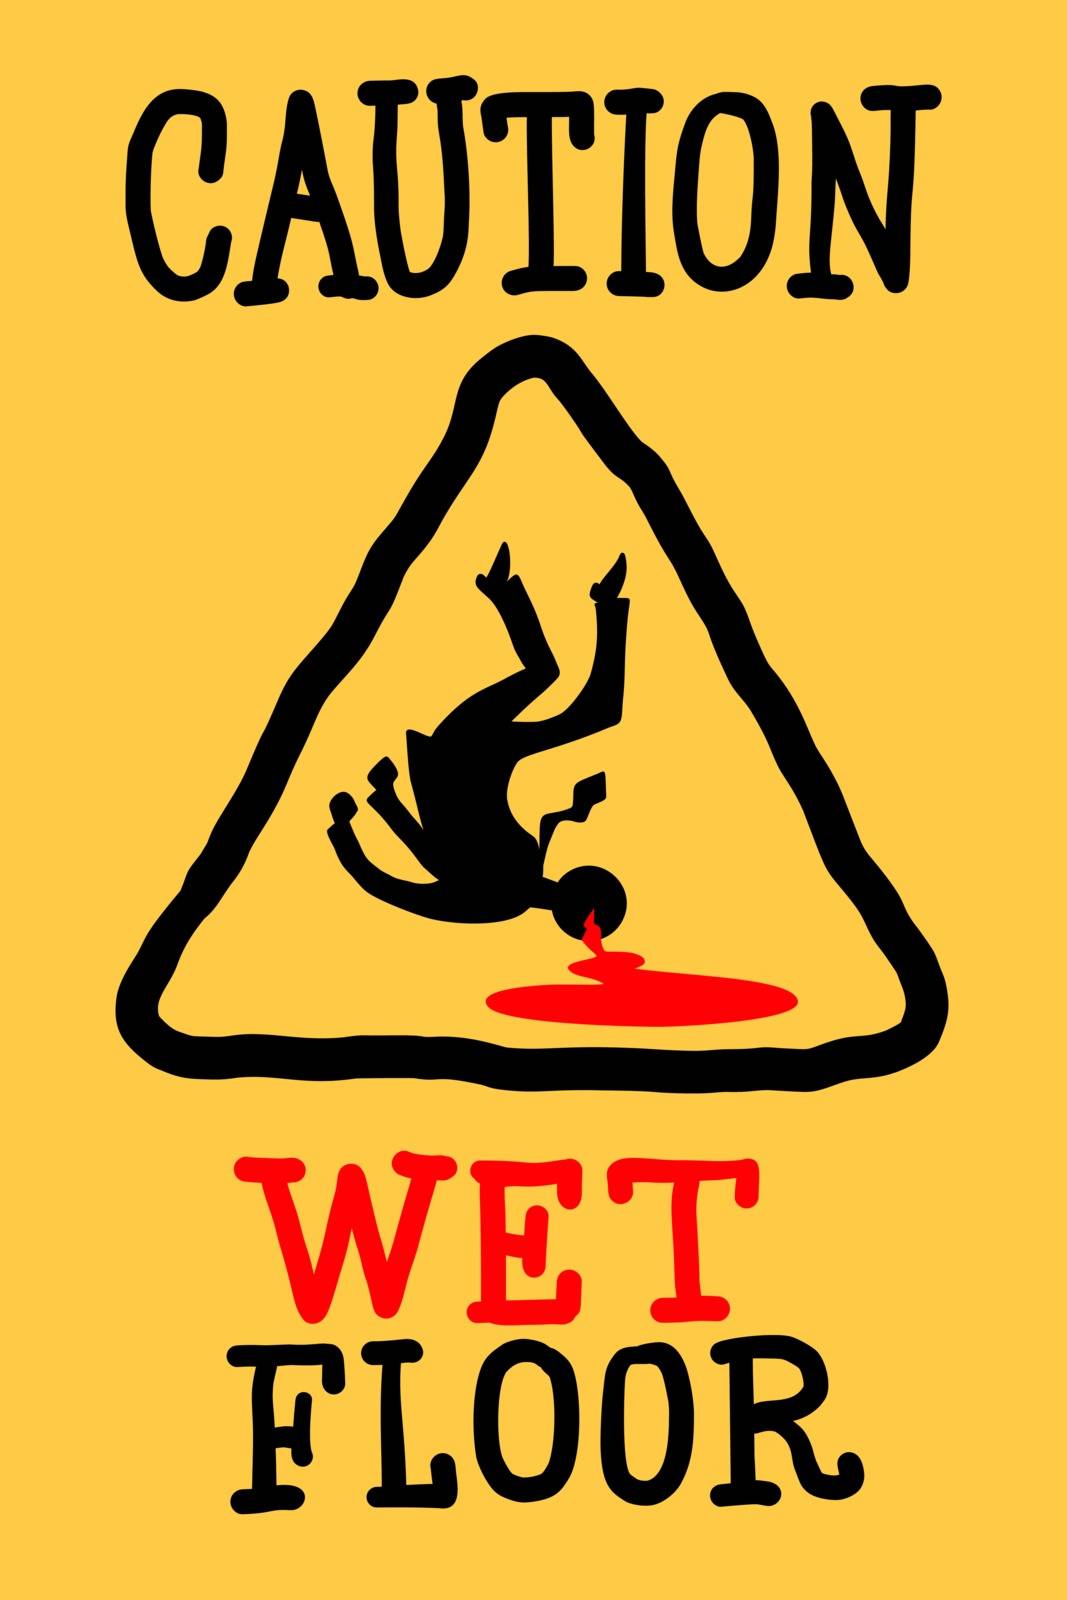 caution wet floor by rogistok